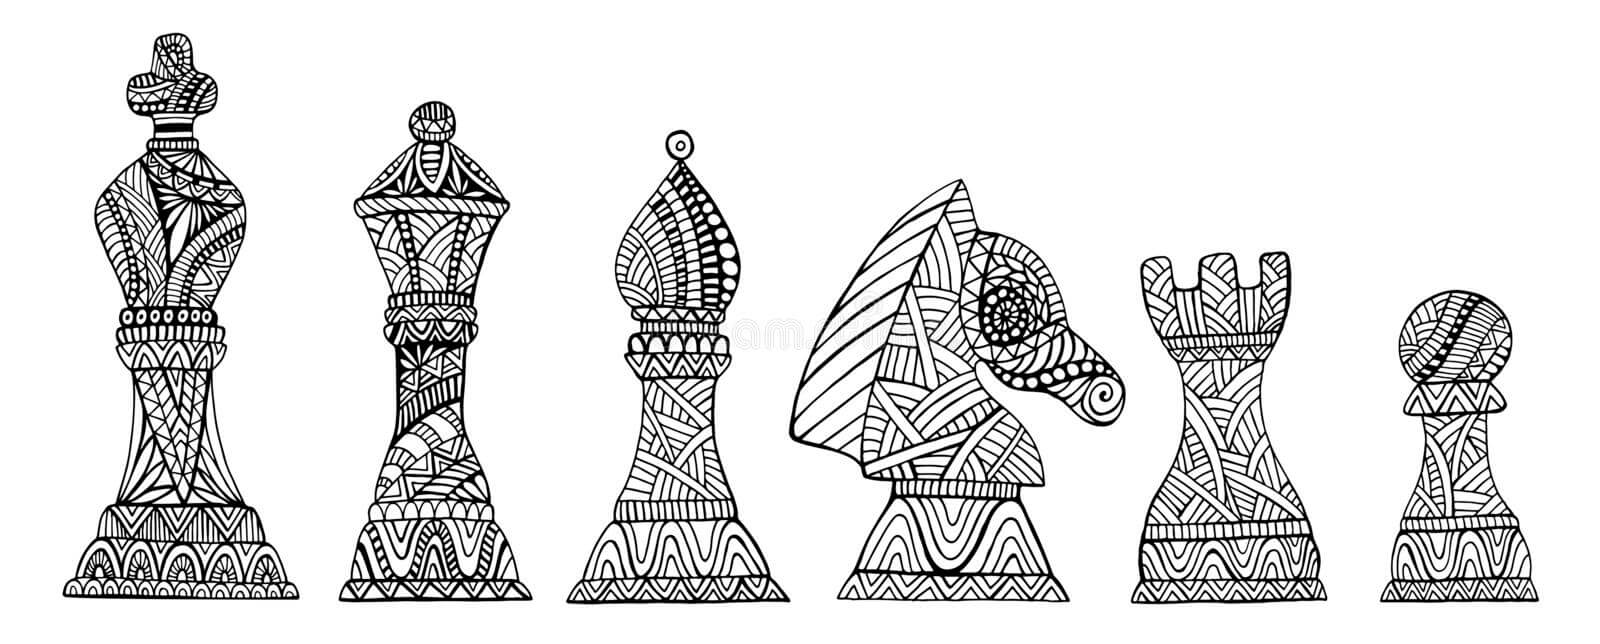 Desenhos de Seis Mandala de Xadrez para colorir